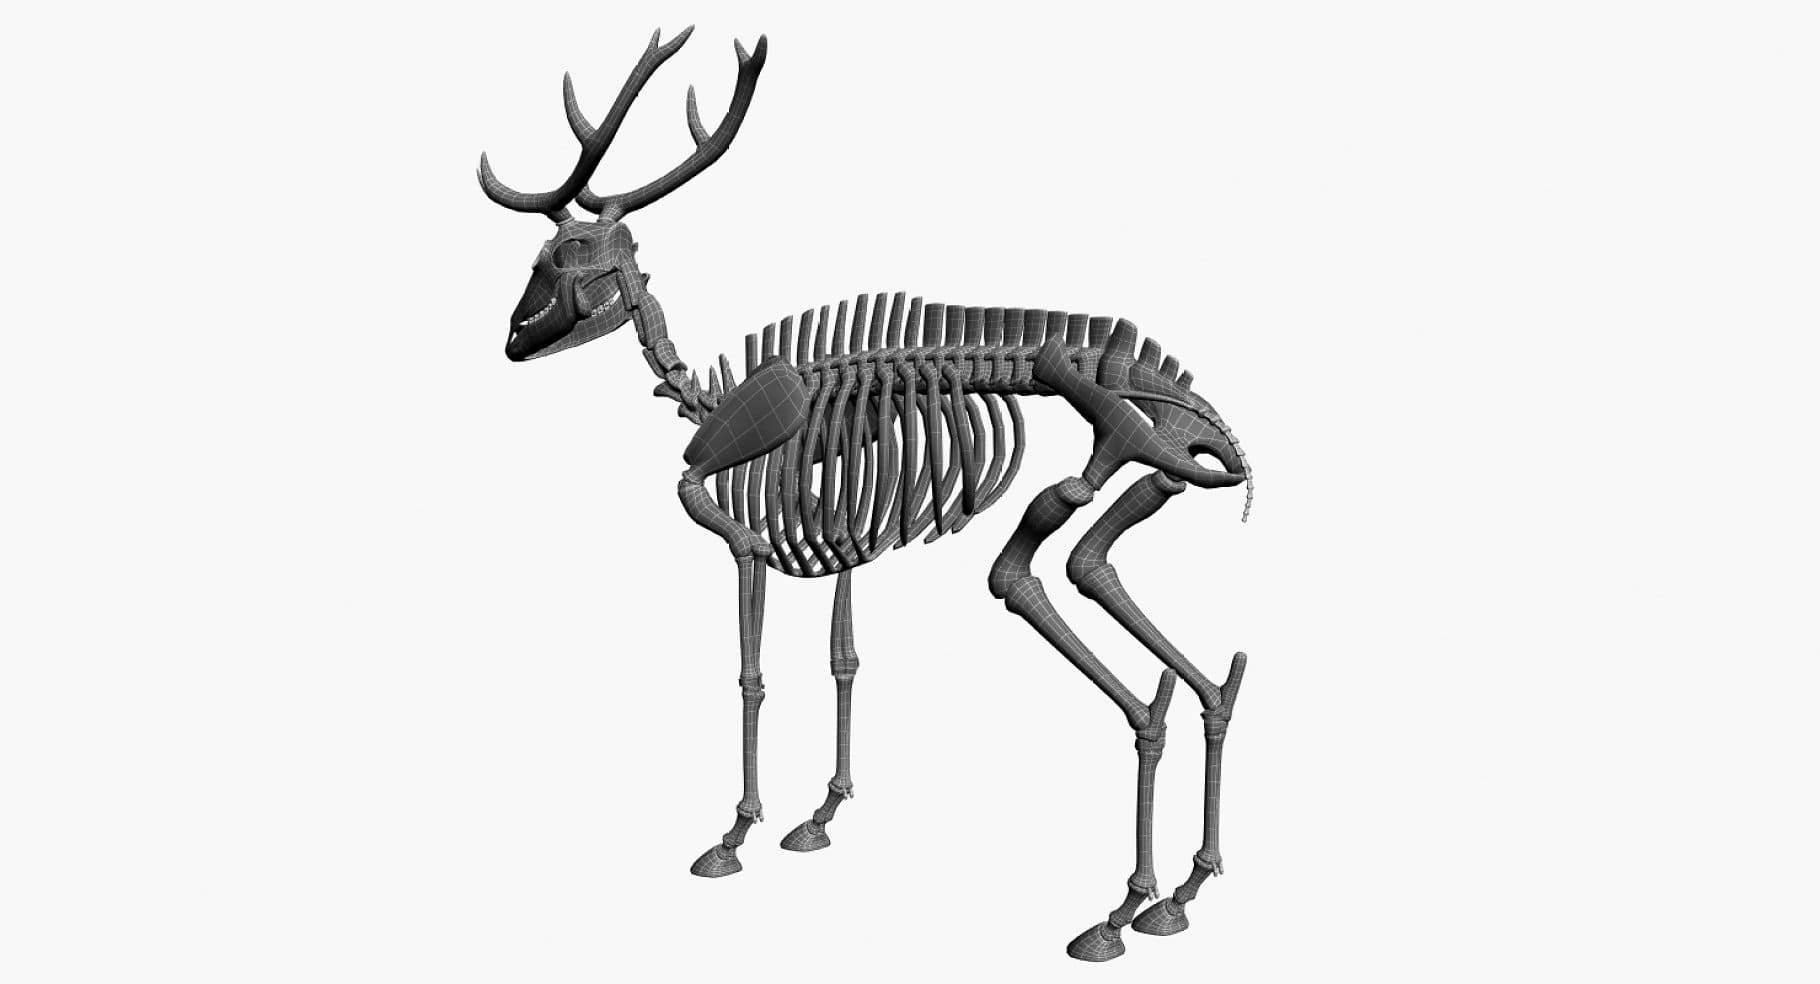 Image of deer joints in 3D model.